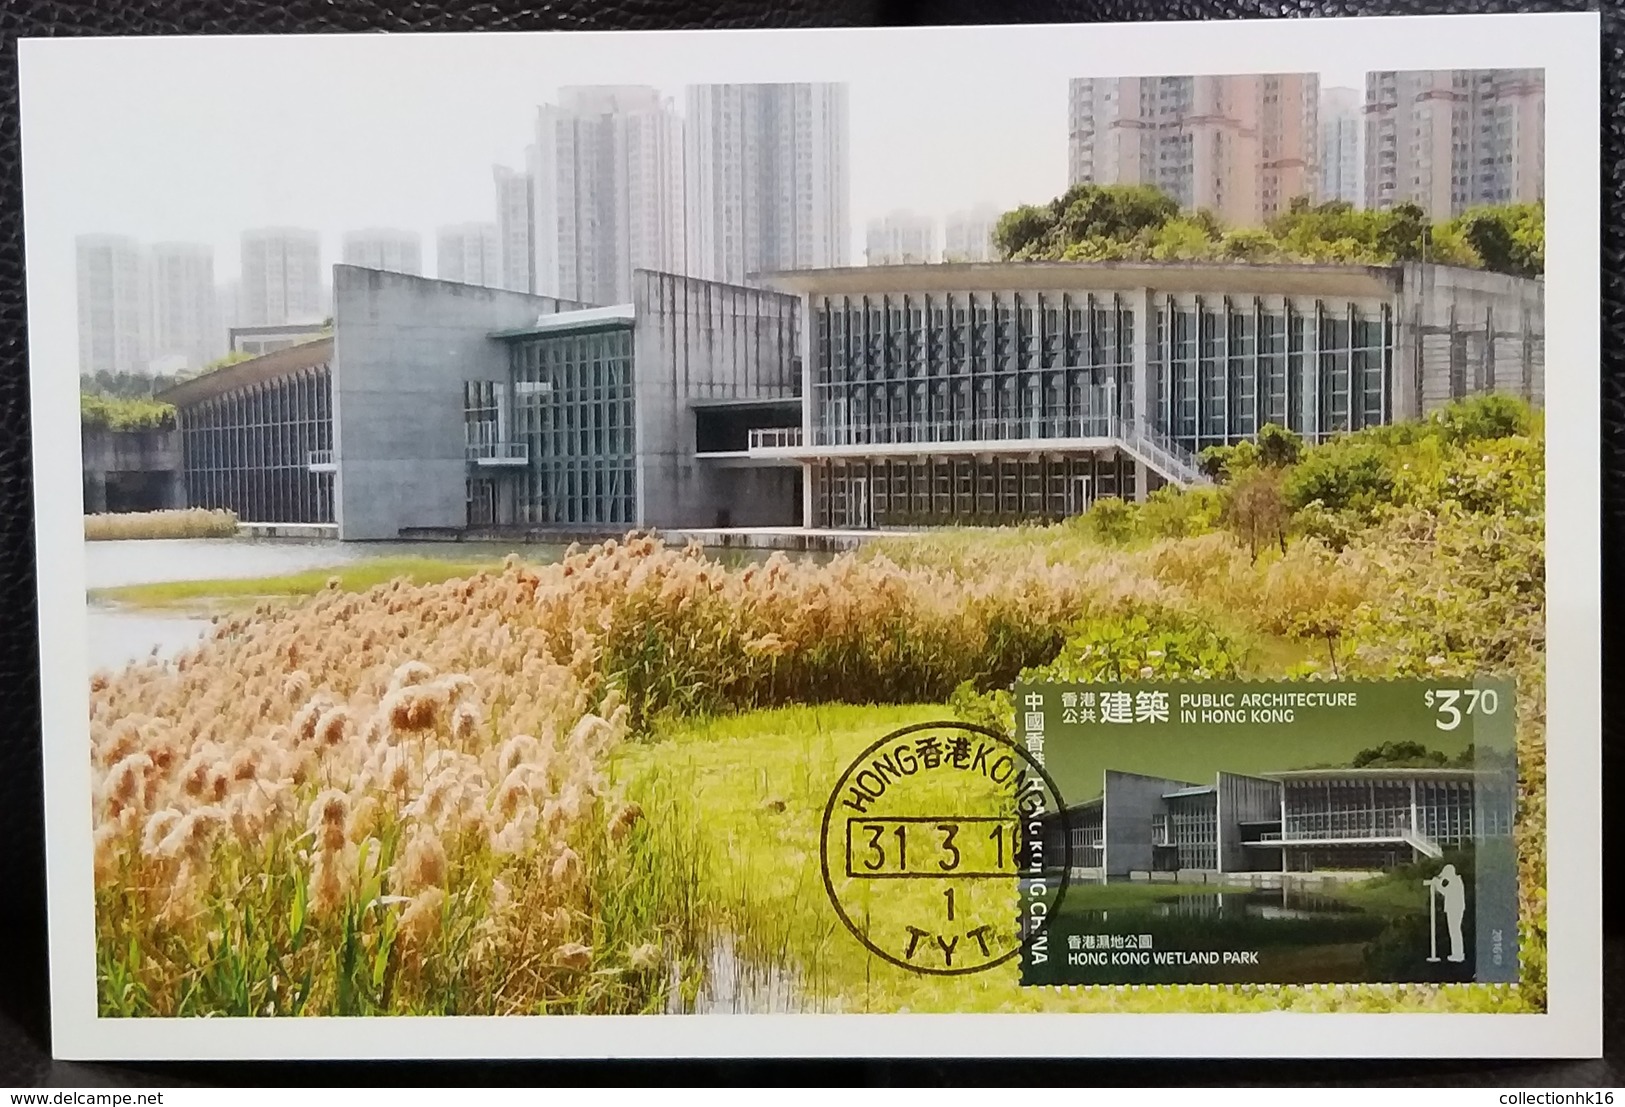 Public Architecture Buildings in Hong Kong 2016 Hong Kong Maximum card MC Set (Location Postmark) (6 cards)